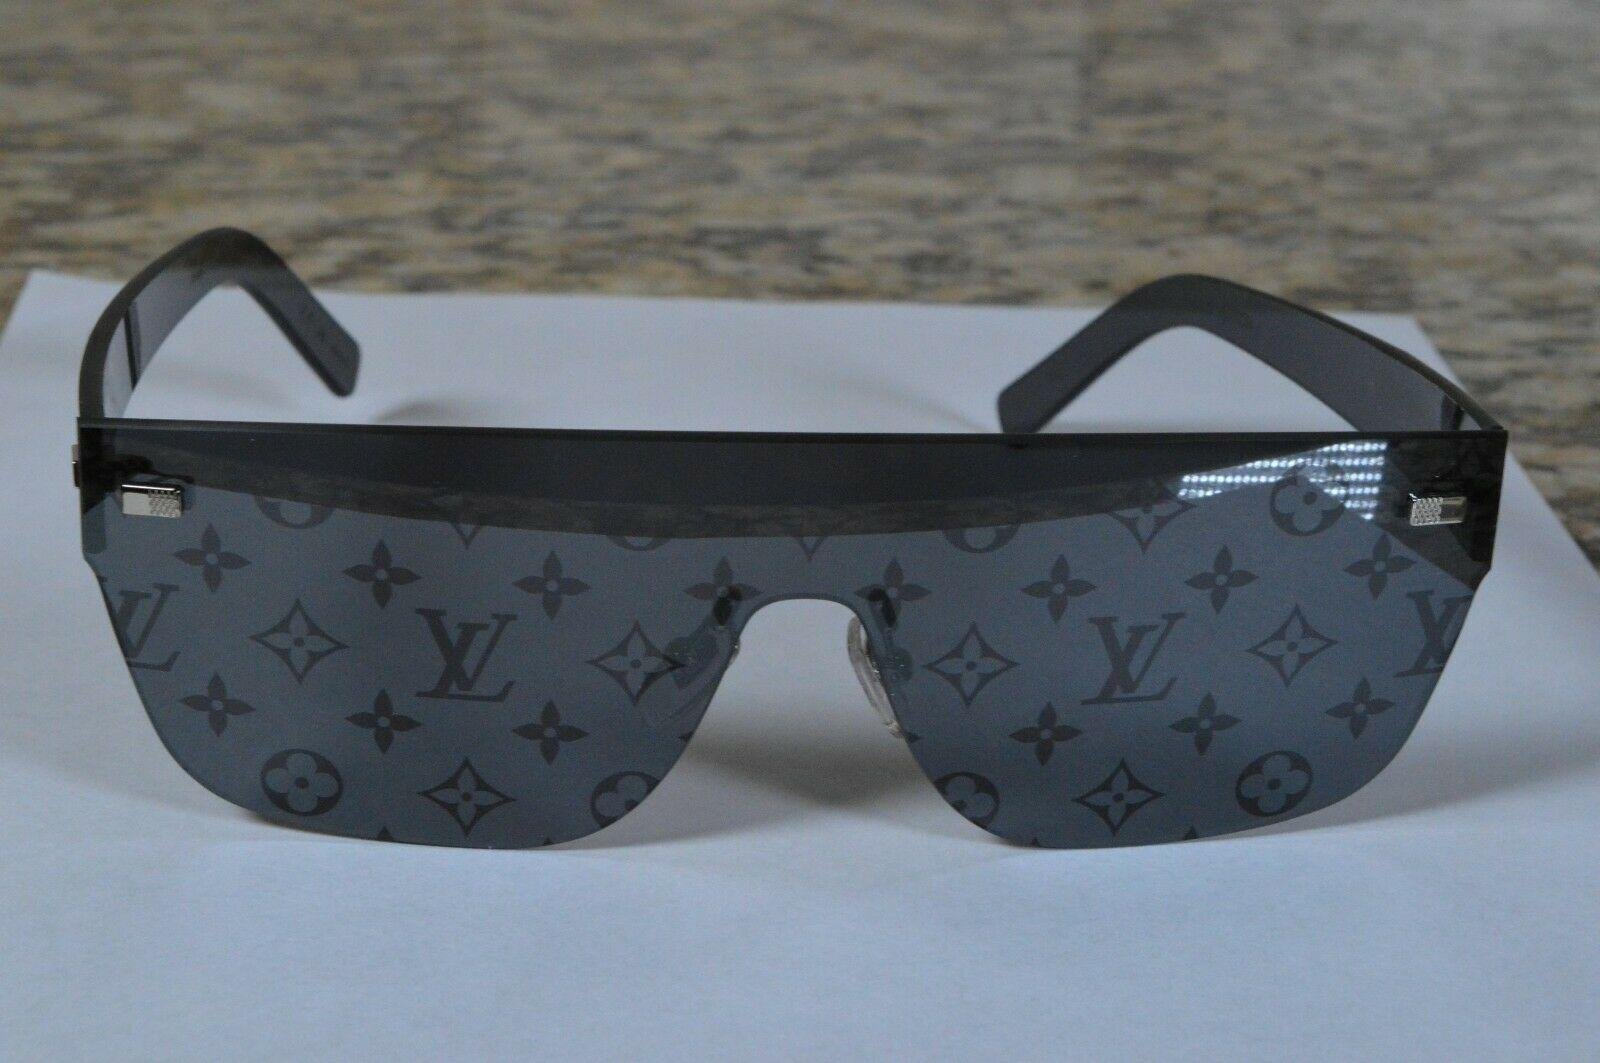                       City Mask Sunglasses Monogram All Over Print Reflect Refle